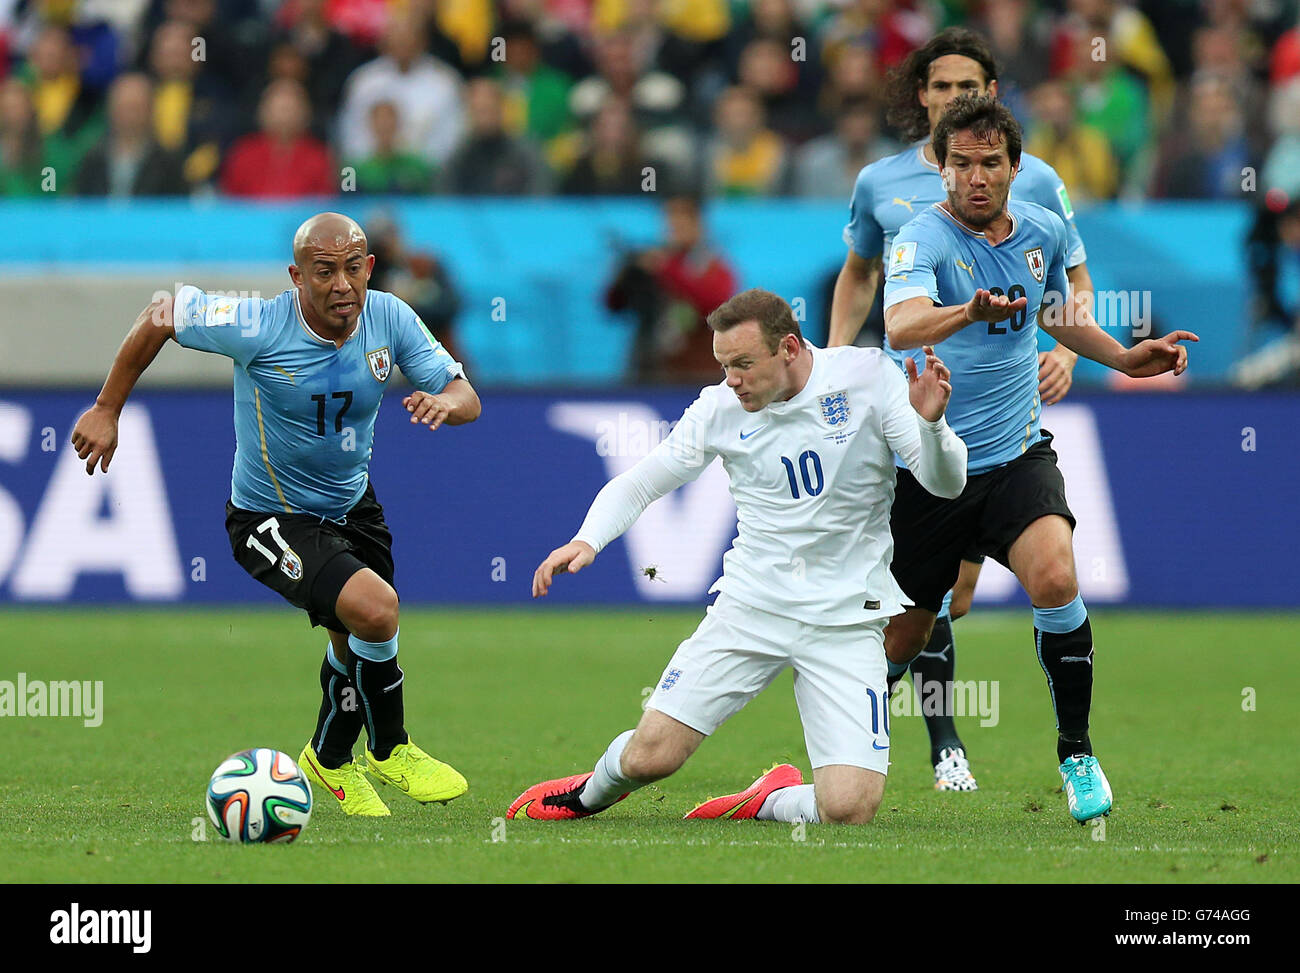 England's Wayne Rooney (centre) in action with Uruguay's Alvaro Gonzalez (right) and Uruguay's Egidio Arevalo Rios (left) during the Group D match the Estadio do Sao Paulo, Sao Paulo, Brazil. Stock Photo